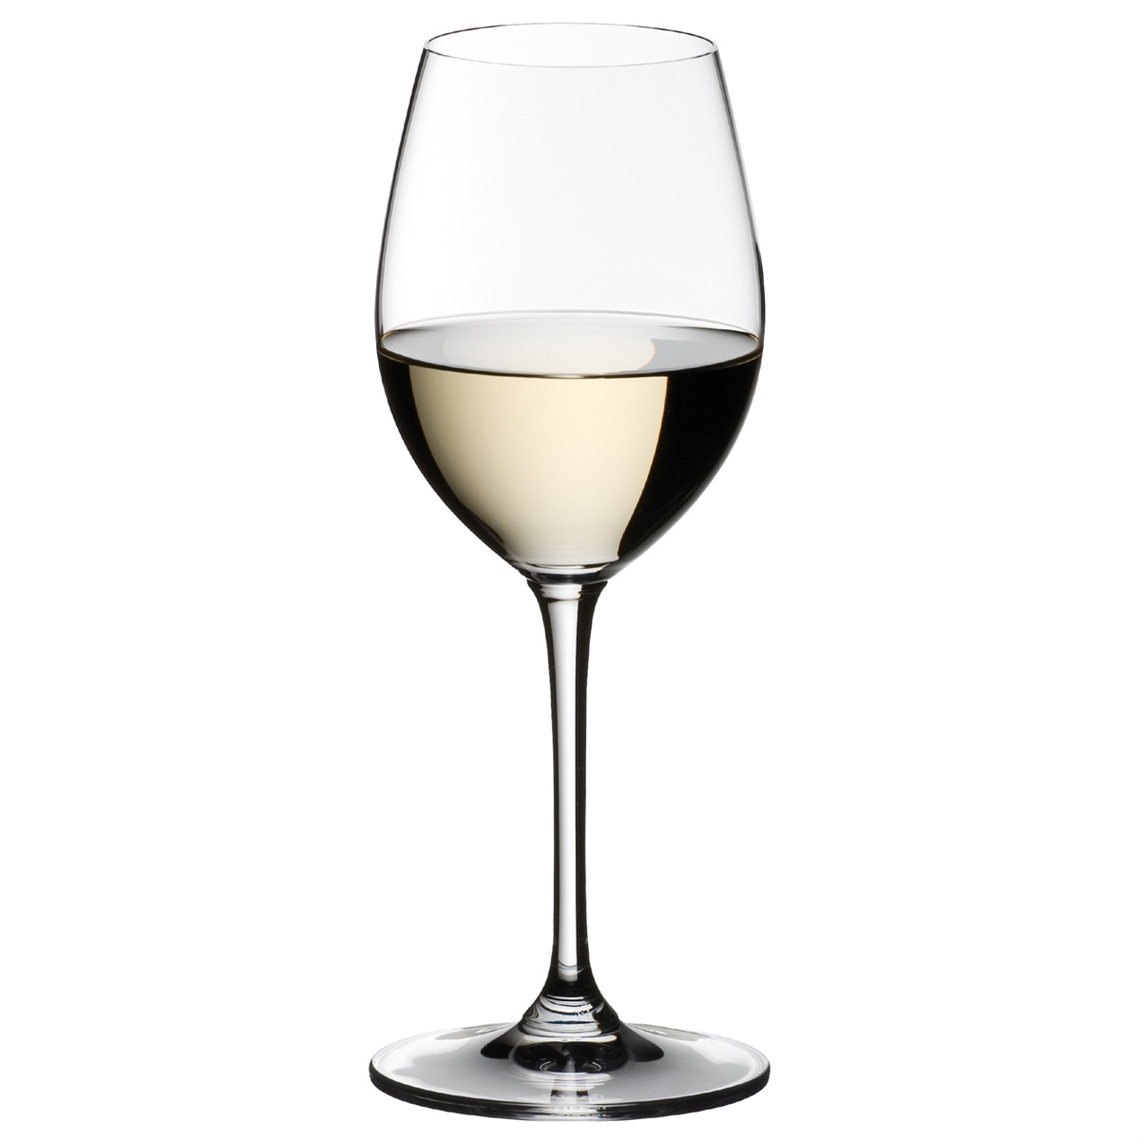 View more restaurant & trade glasses from our Dessert Wine Glasses range